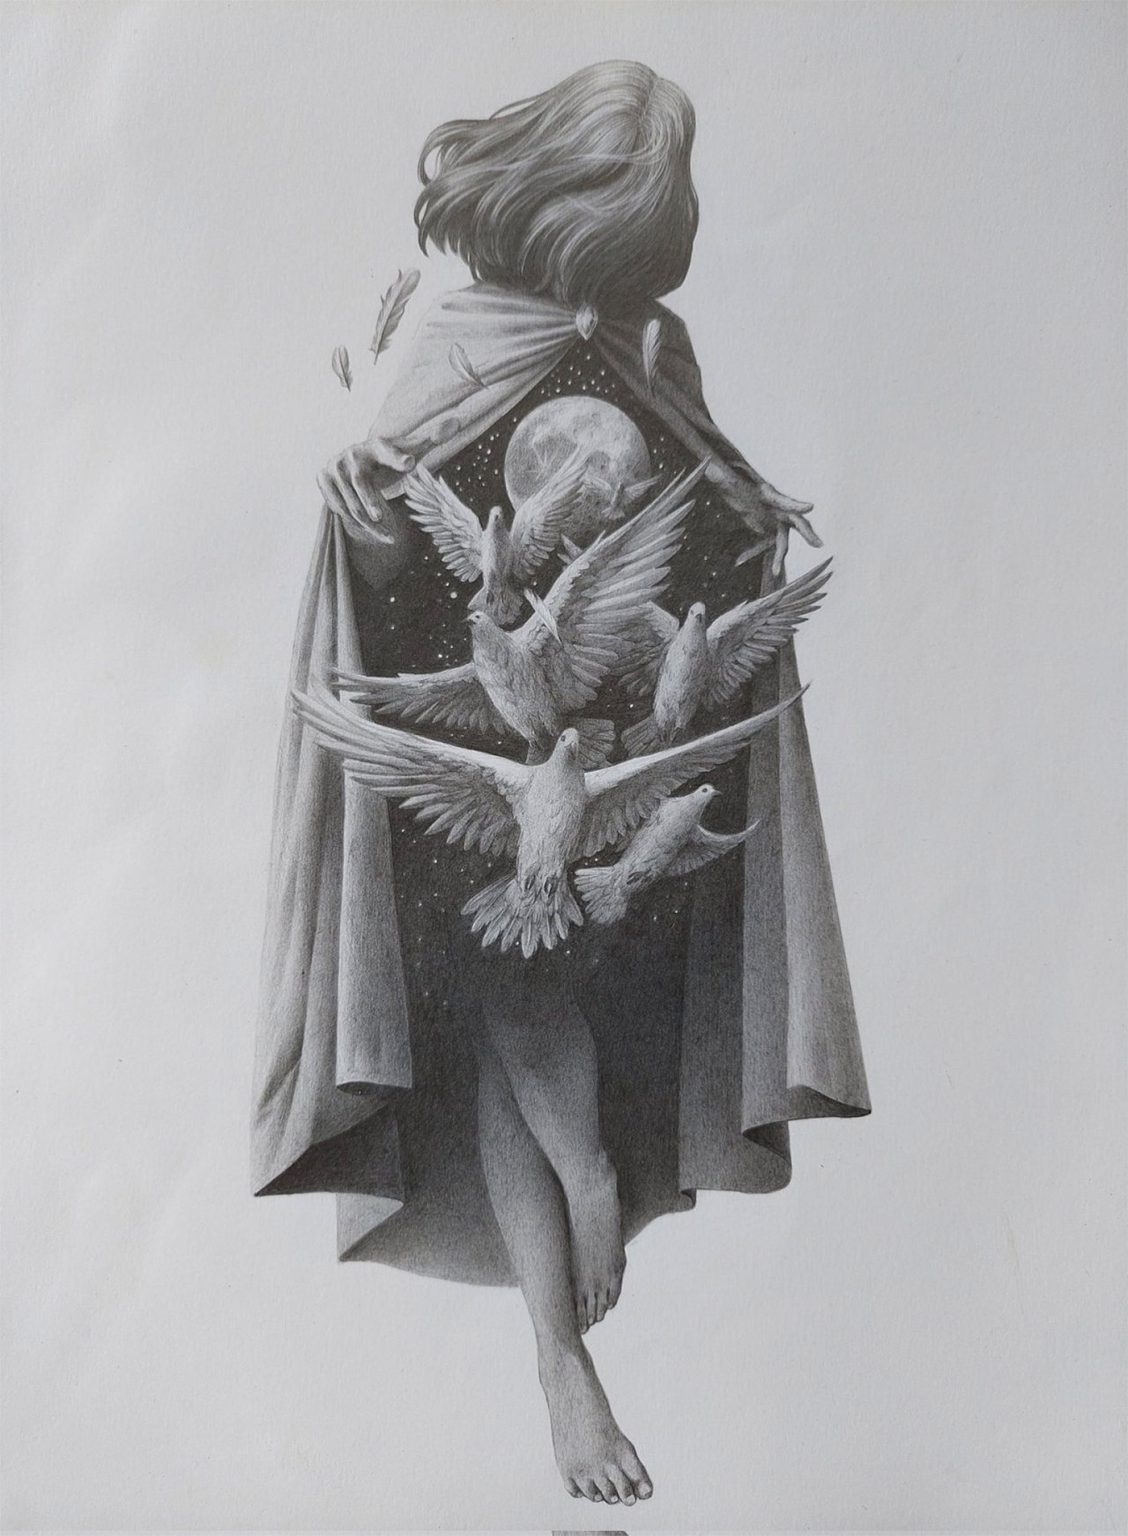 Garis Edelweiss超现实风格铅笔画作品